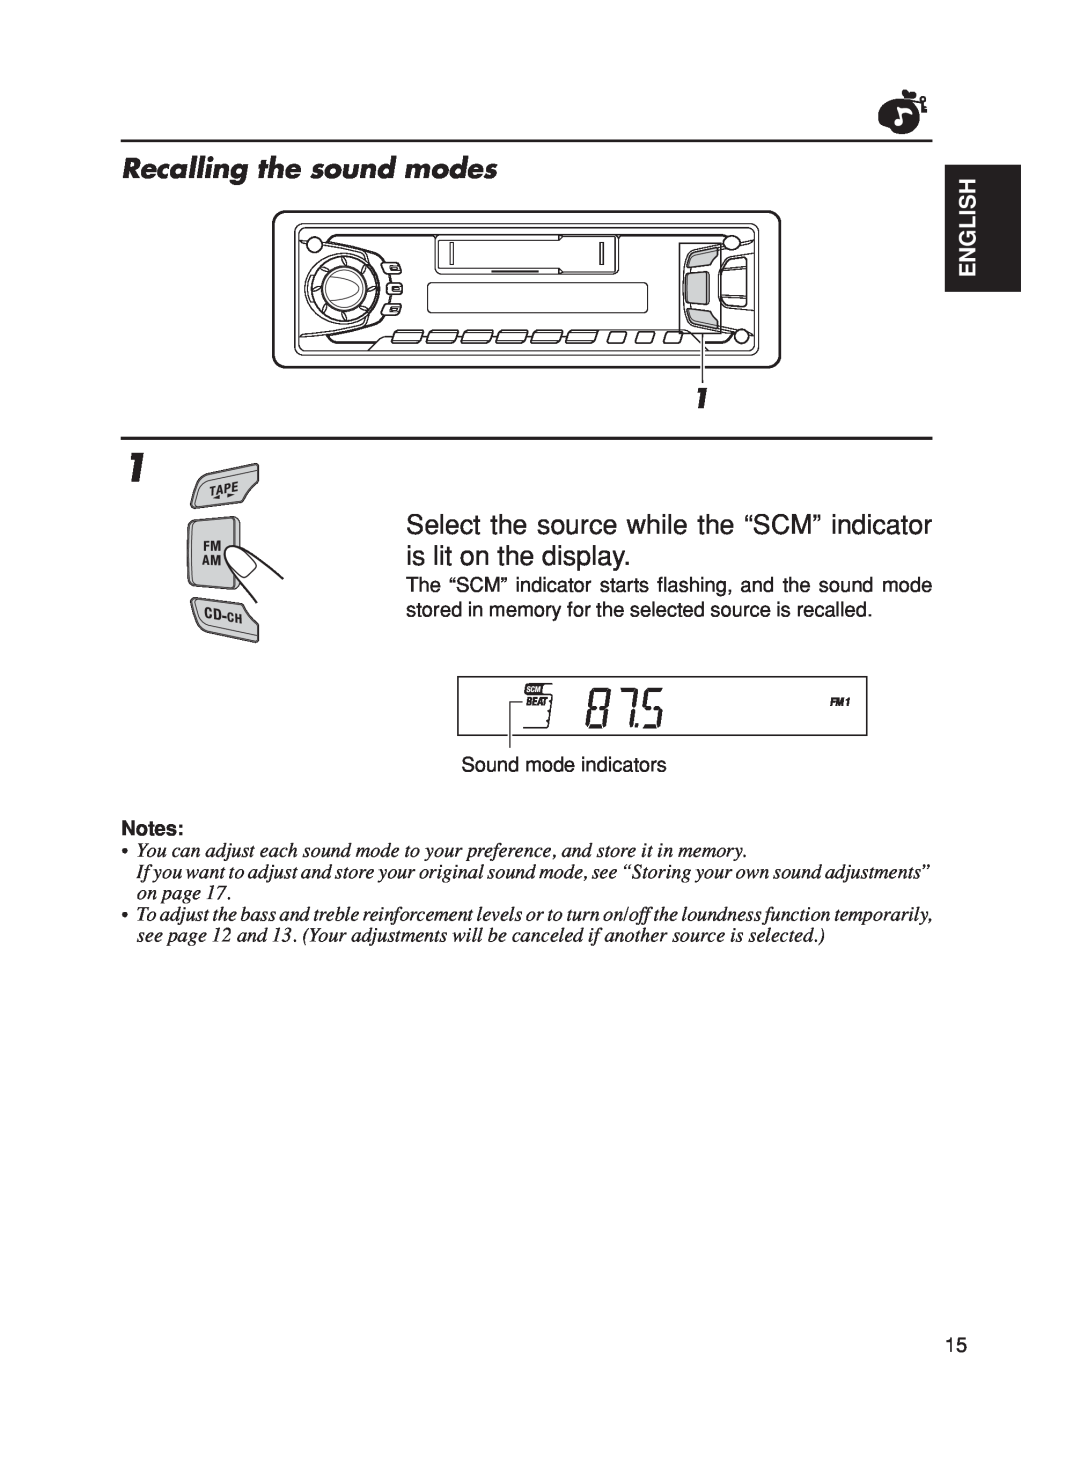 JVC KS-FX270 manual Recalling the sound modes, English, Sound mode indicators 